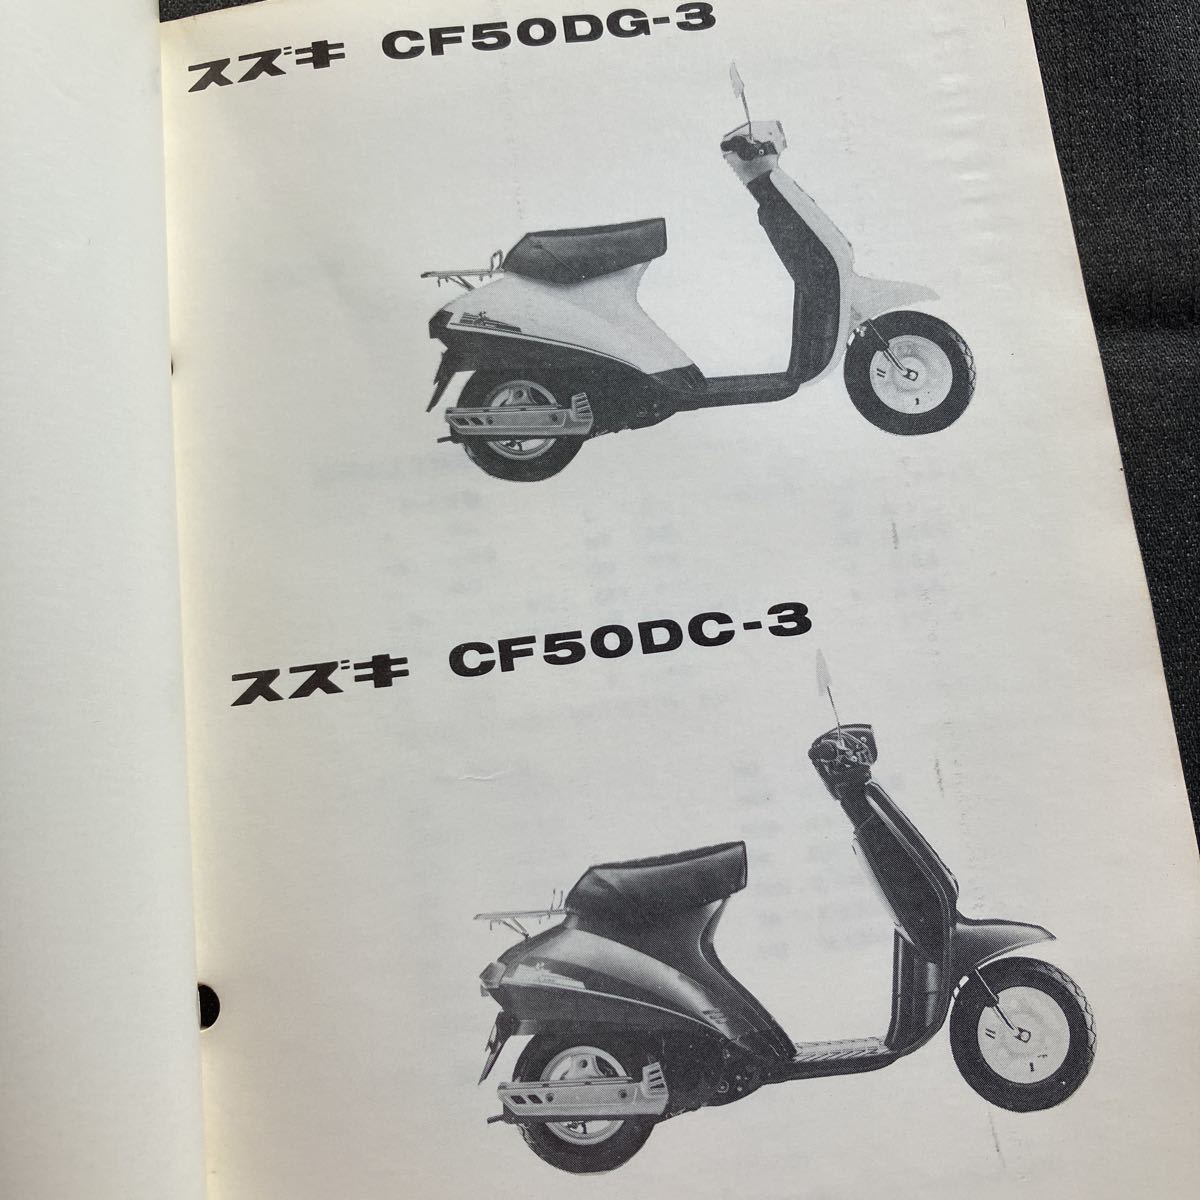 p072805 Suzuki orchid CF50 CA17A parts catalog 1985 year 4 month RAN CF50DG-3 CF50DC-3